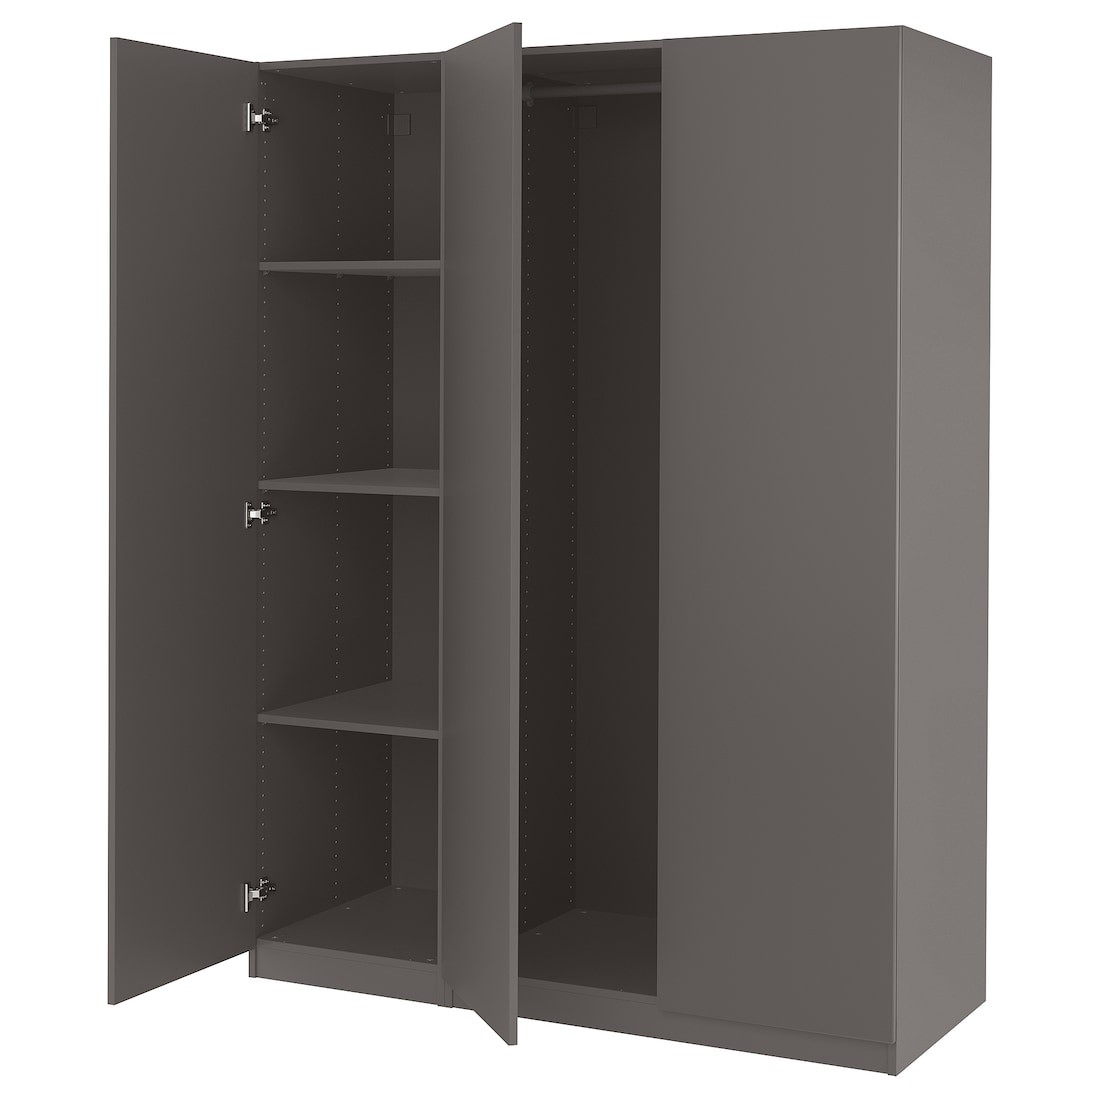 PAX ПАКС / FORSAND ФОРСАНД Комбинация шкафов, темно-серый / темно-серый, 150x60x201 см